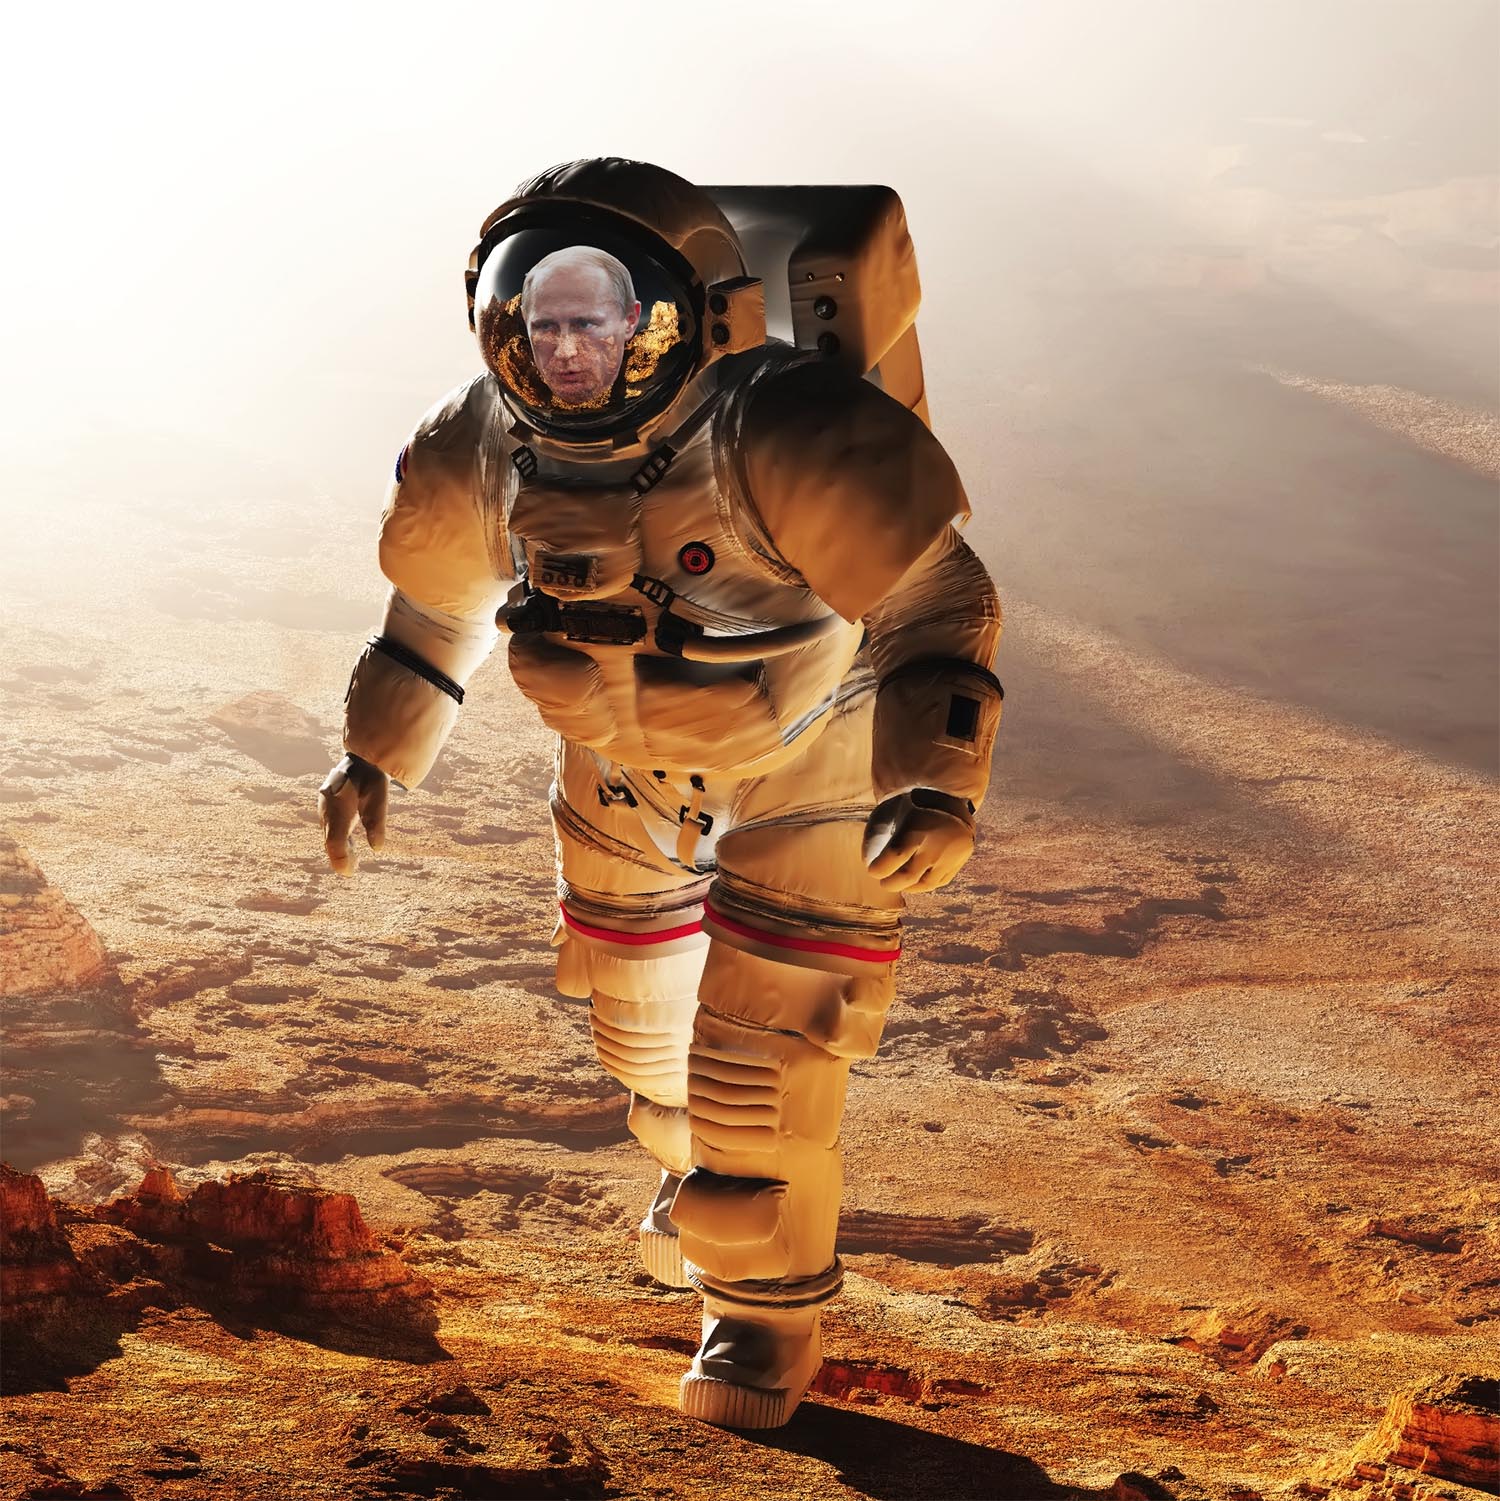 The astronaut Putin fights ISIS